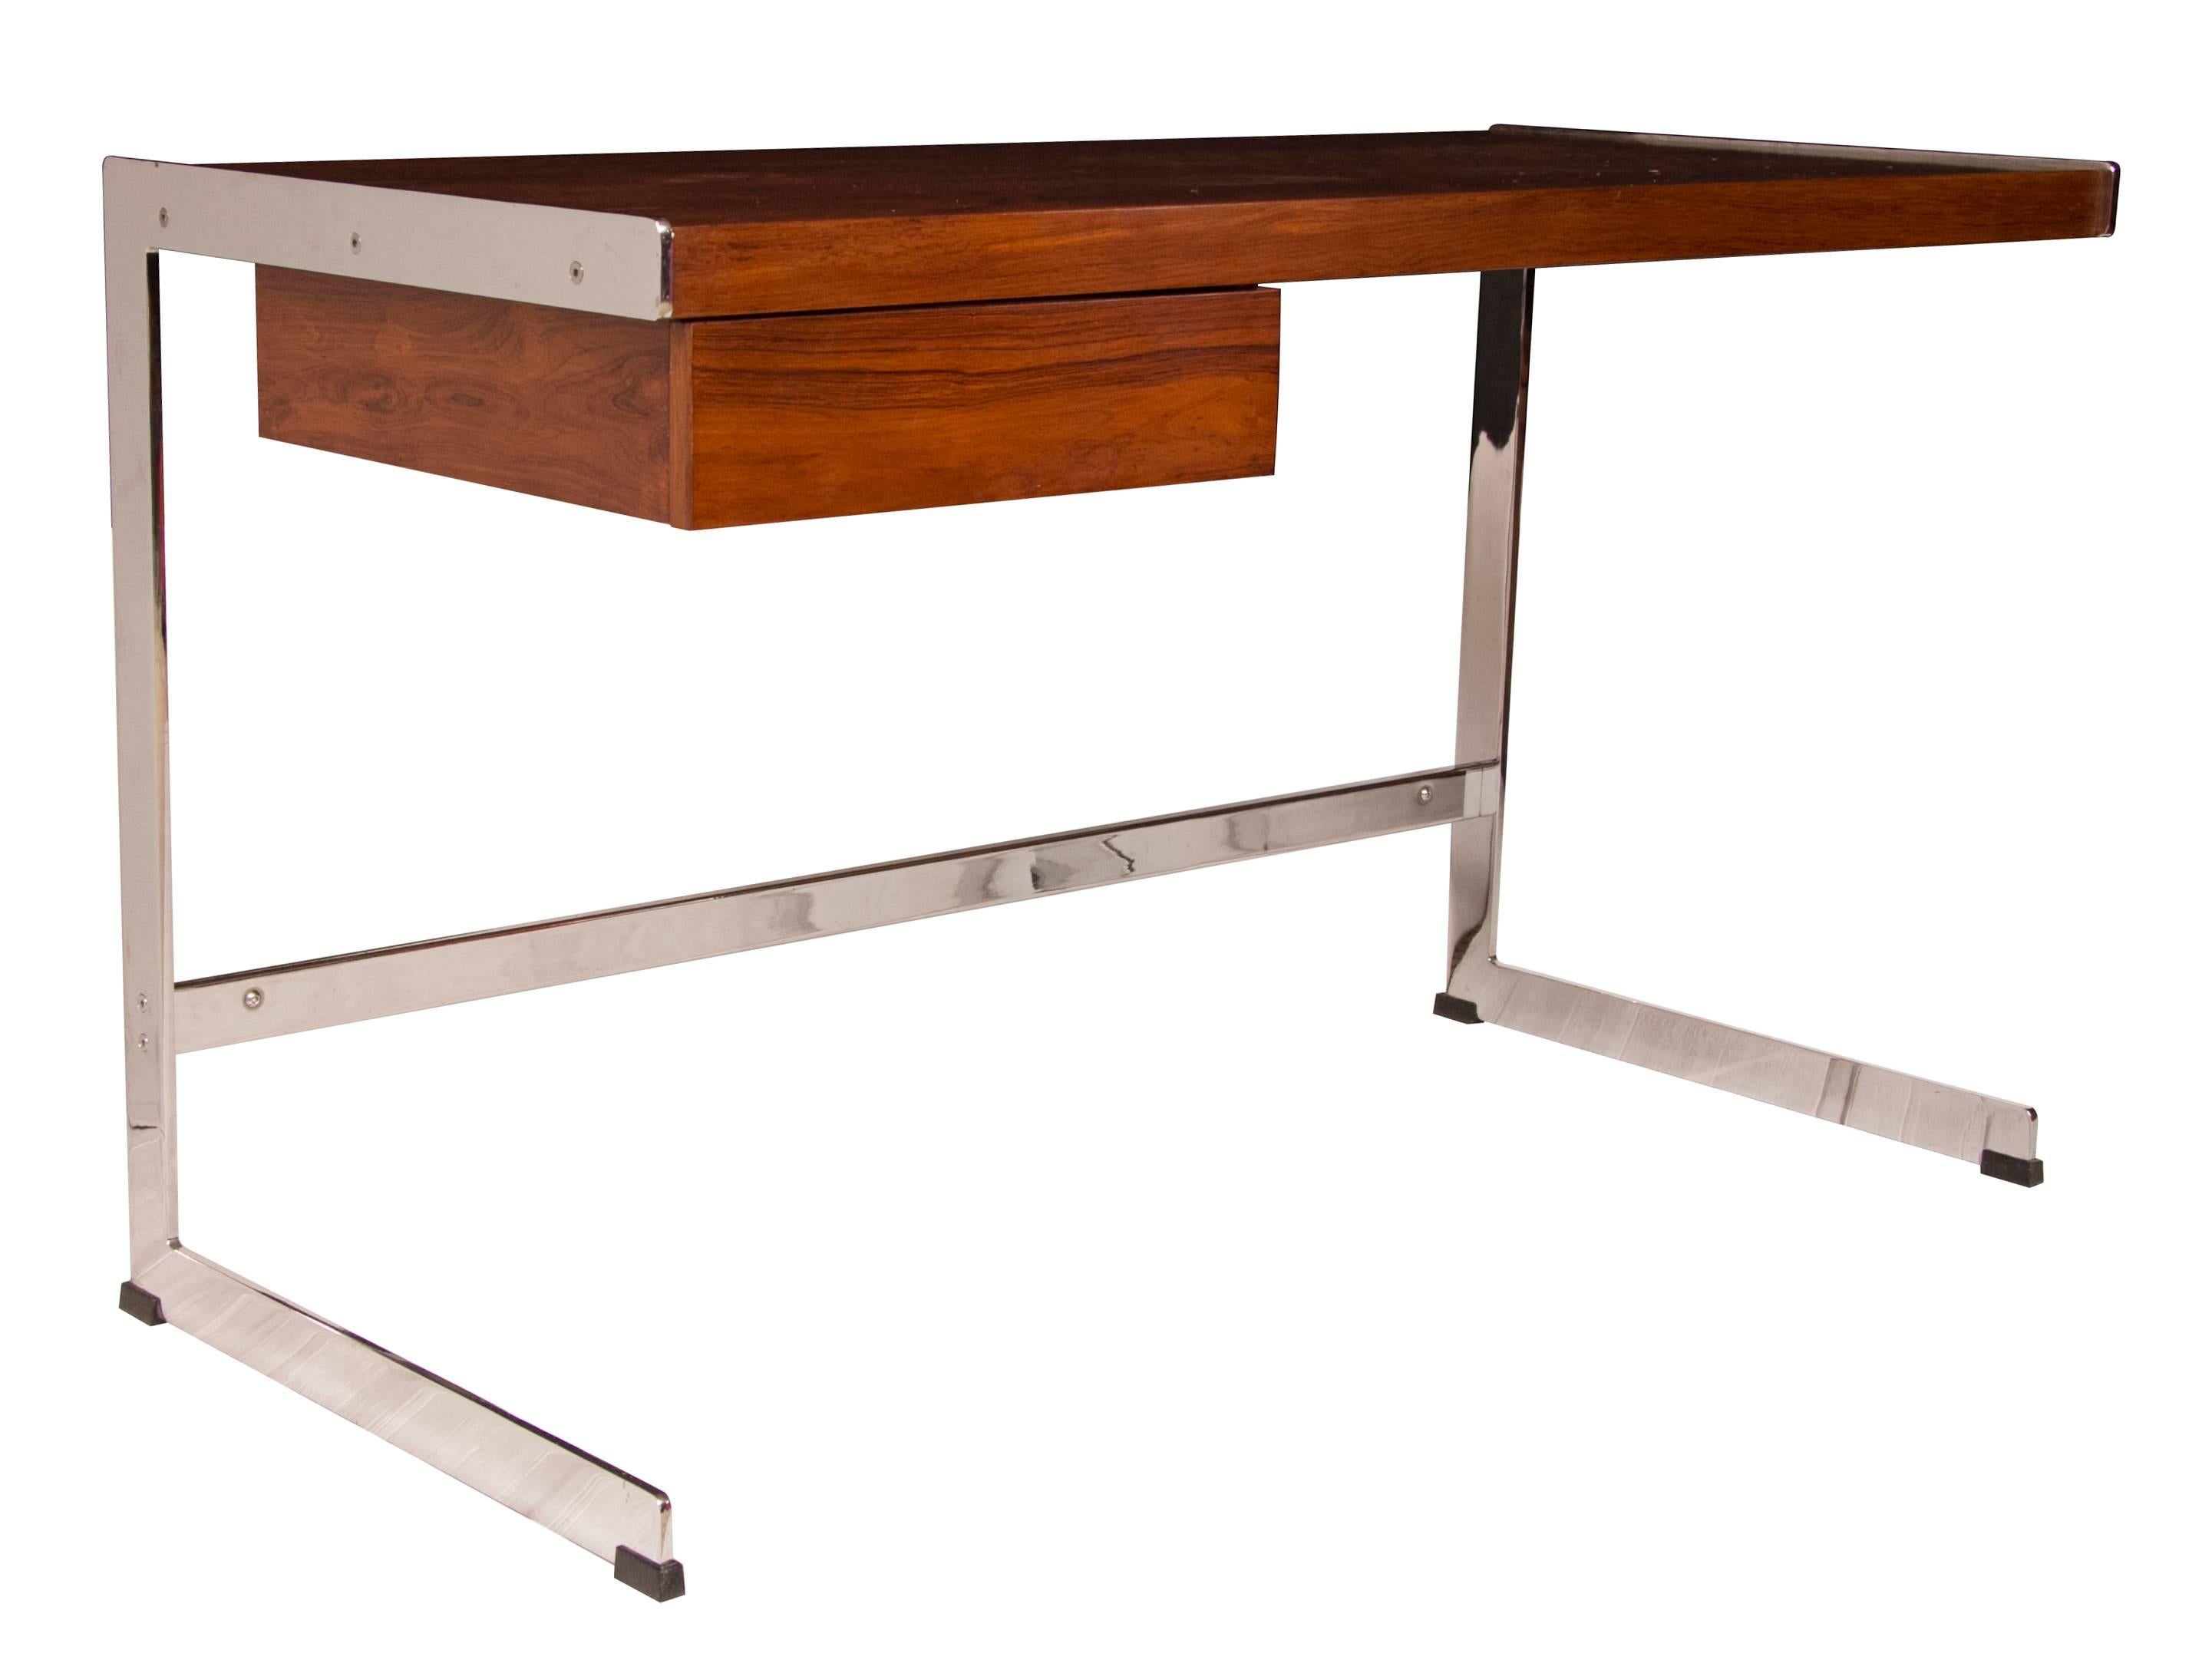 British Midcentury Merrow Associates Rosewood and Chrome Desk Designed by David Folker